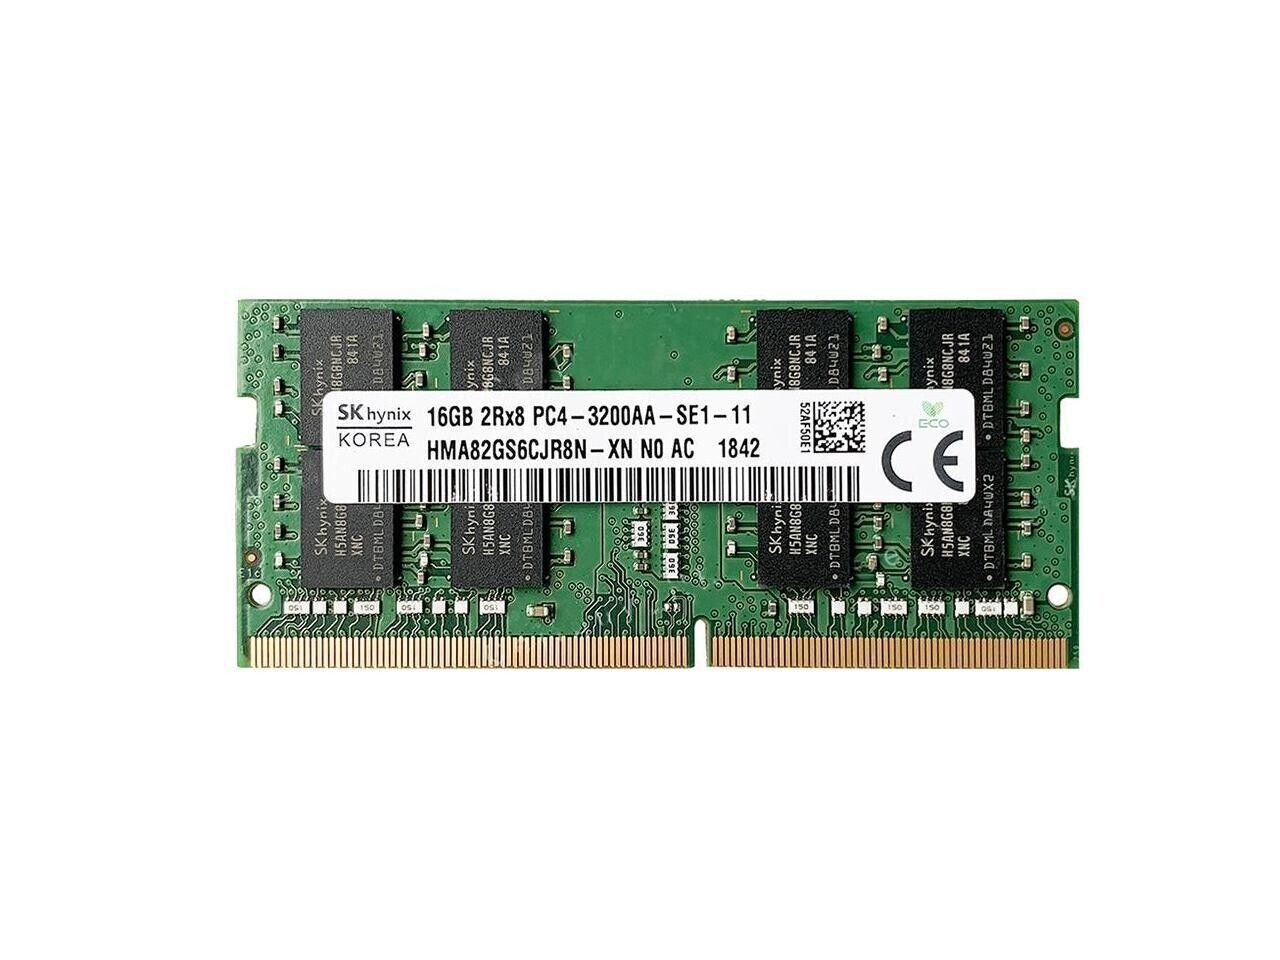 SK Hynix 16GB 2Rx8 PC4 3200AA SODIMM Laptop Memory HMA82GS6DJR8N